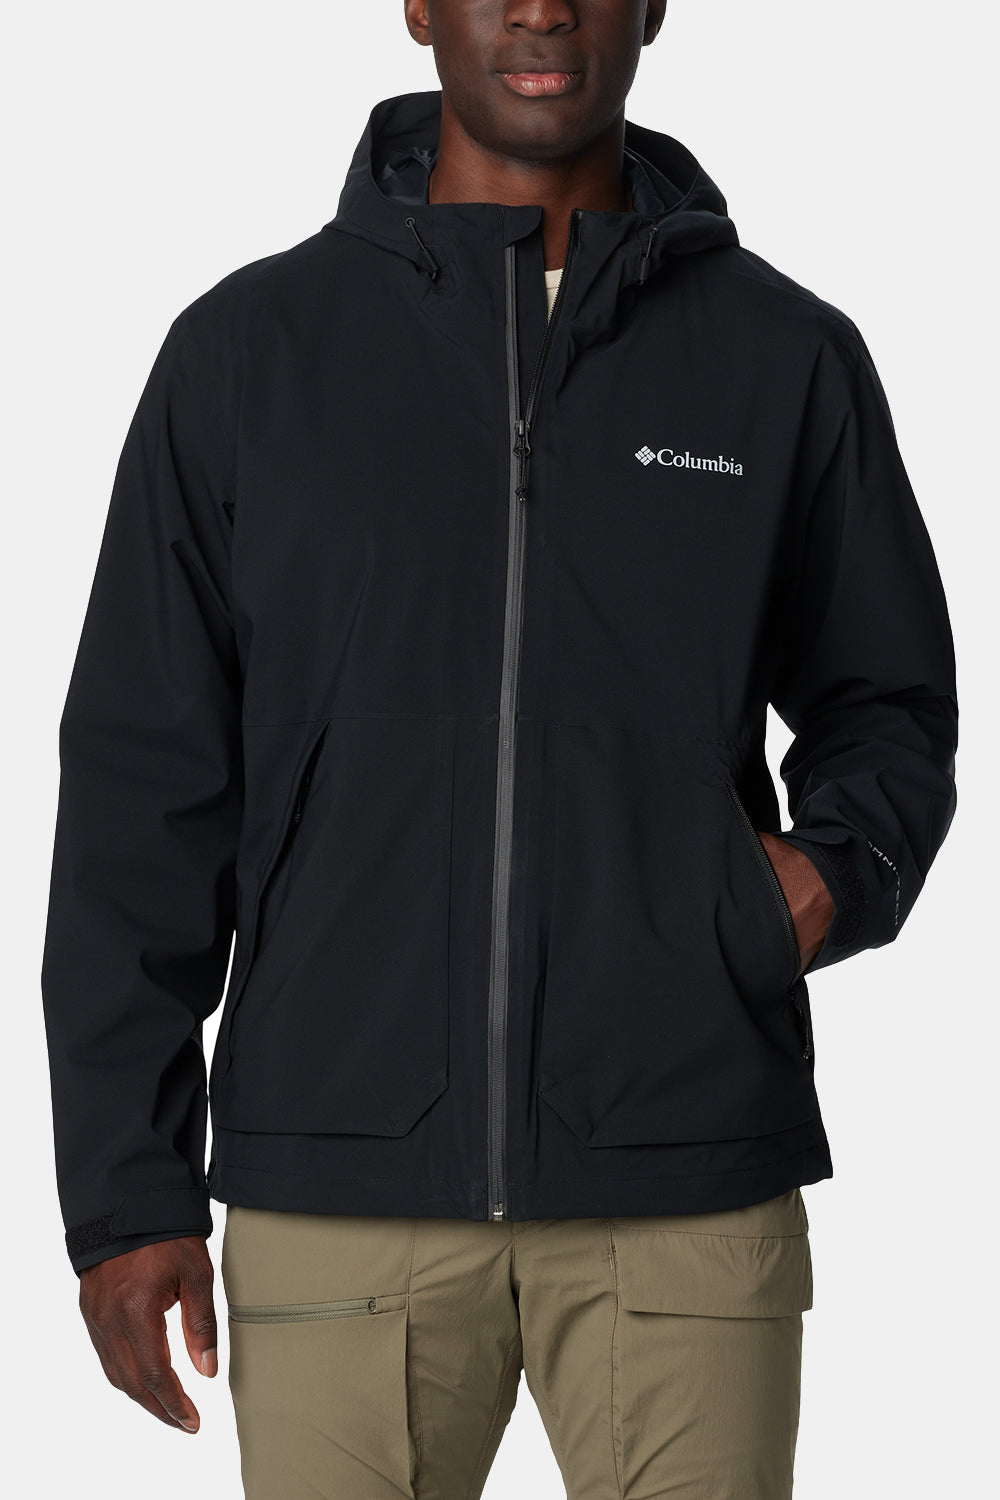 Columbia Altbound Jacket (Black)
